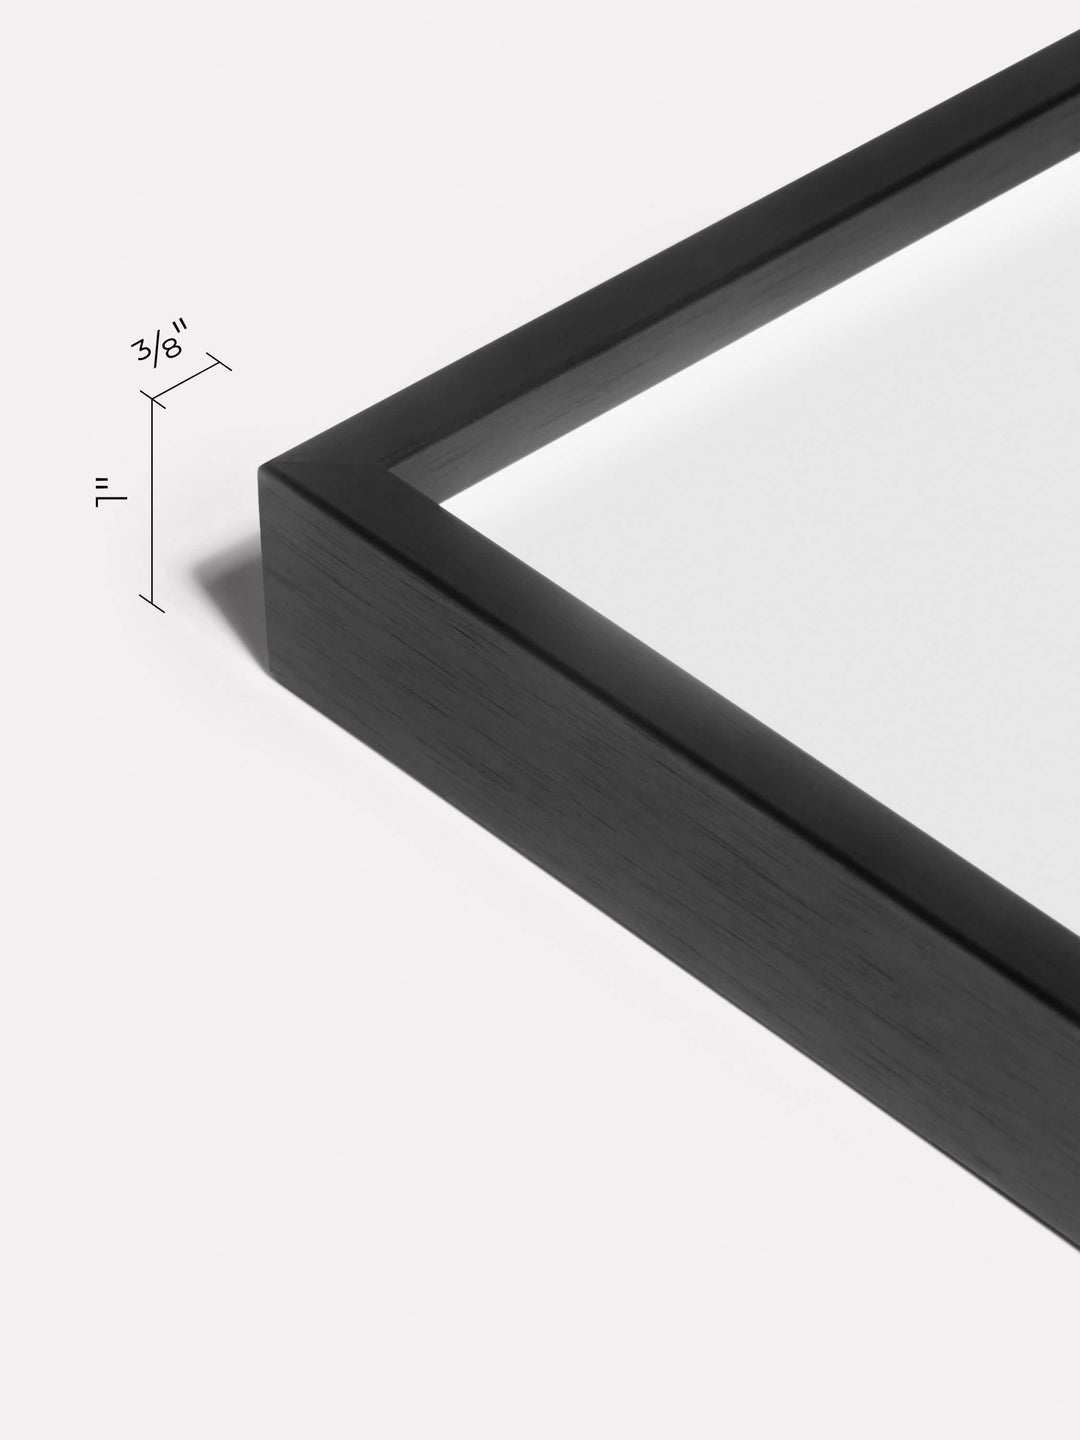 8x10-inch Thin Frame, Black - Close-up view